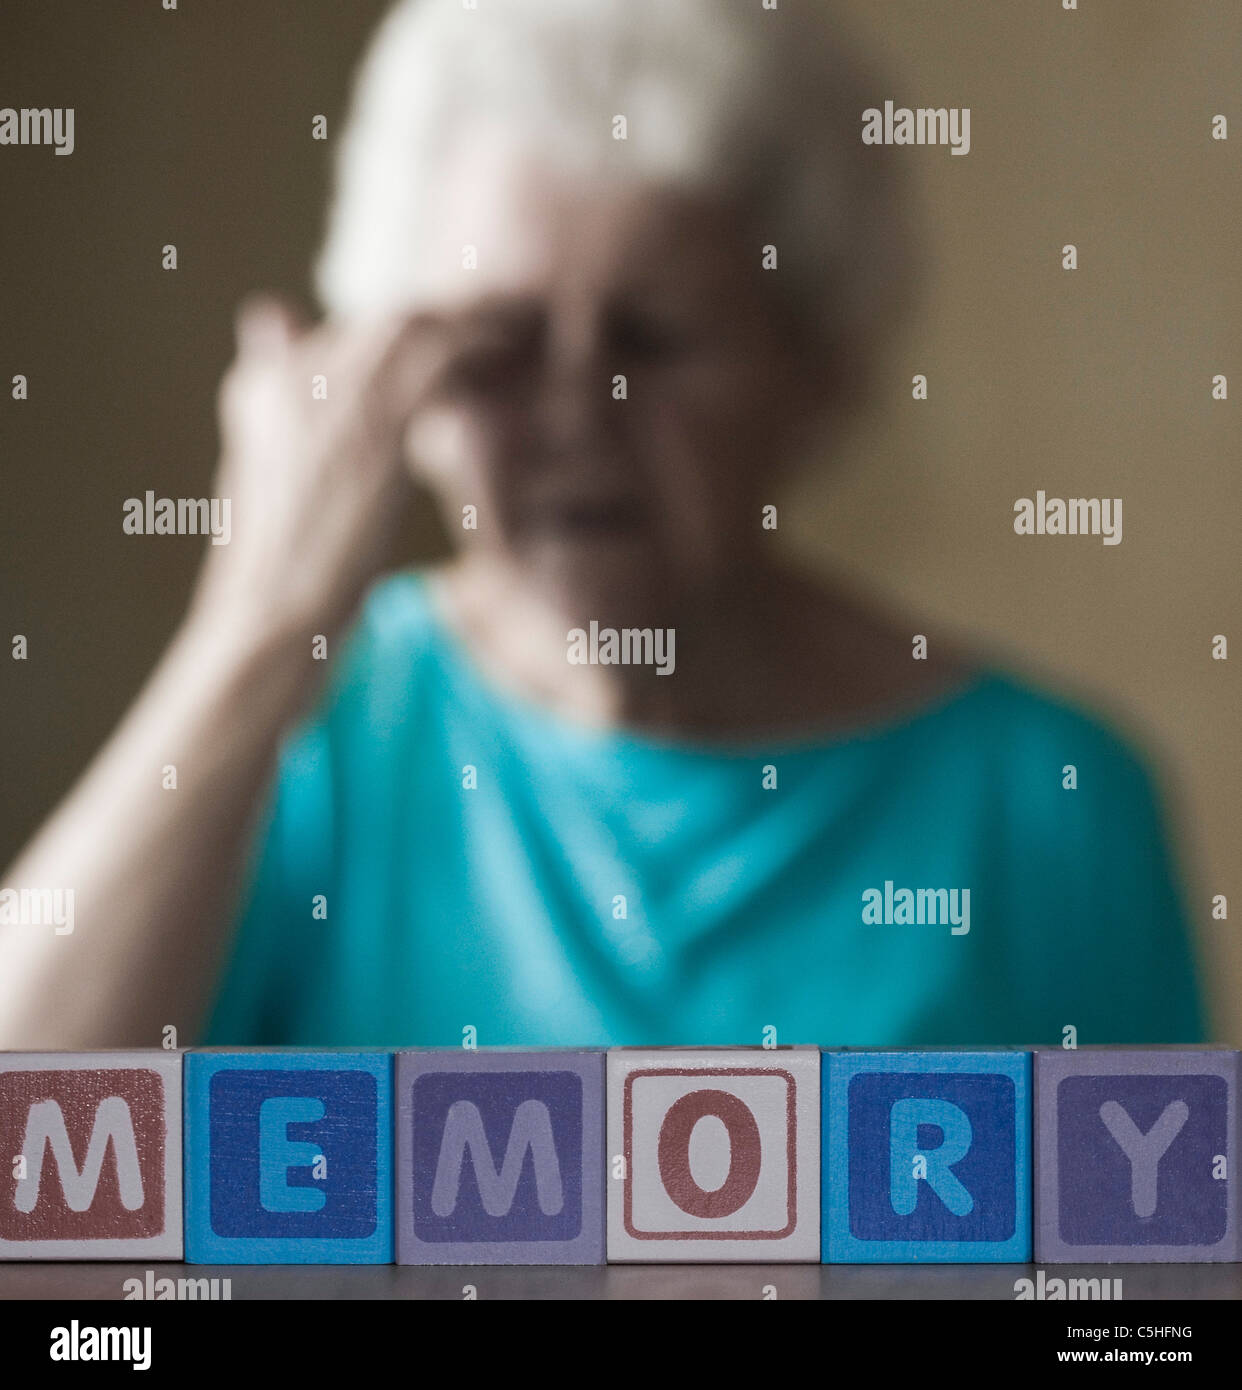 Alzheimer's disease, conceptual image Stock Photo